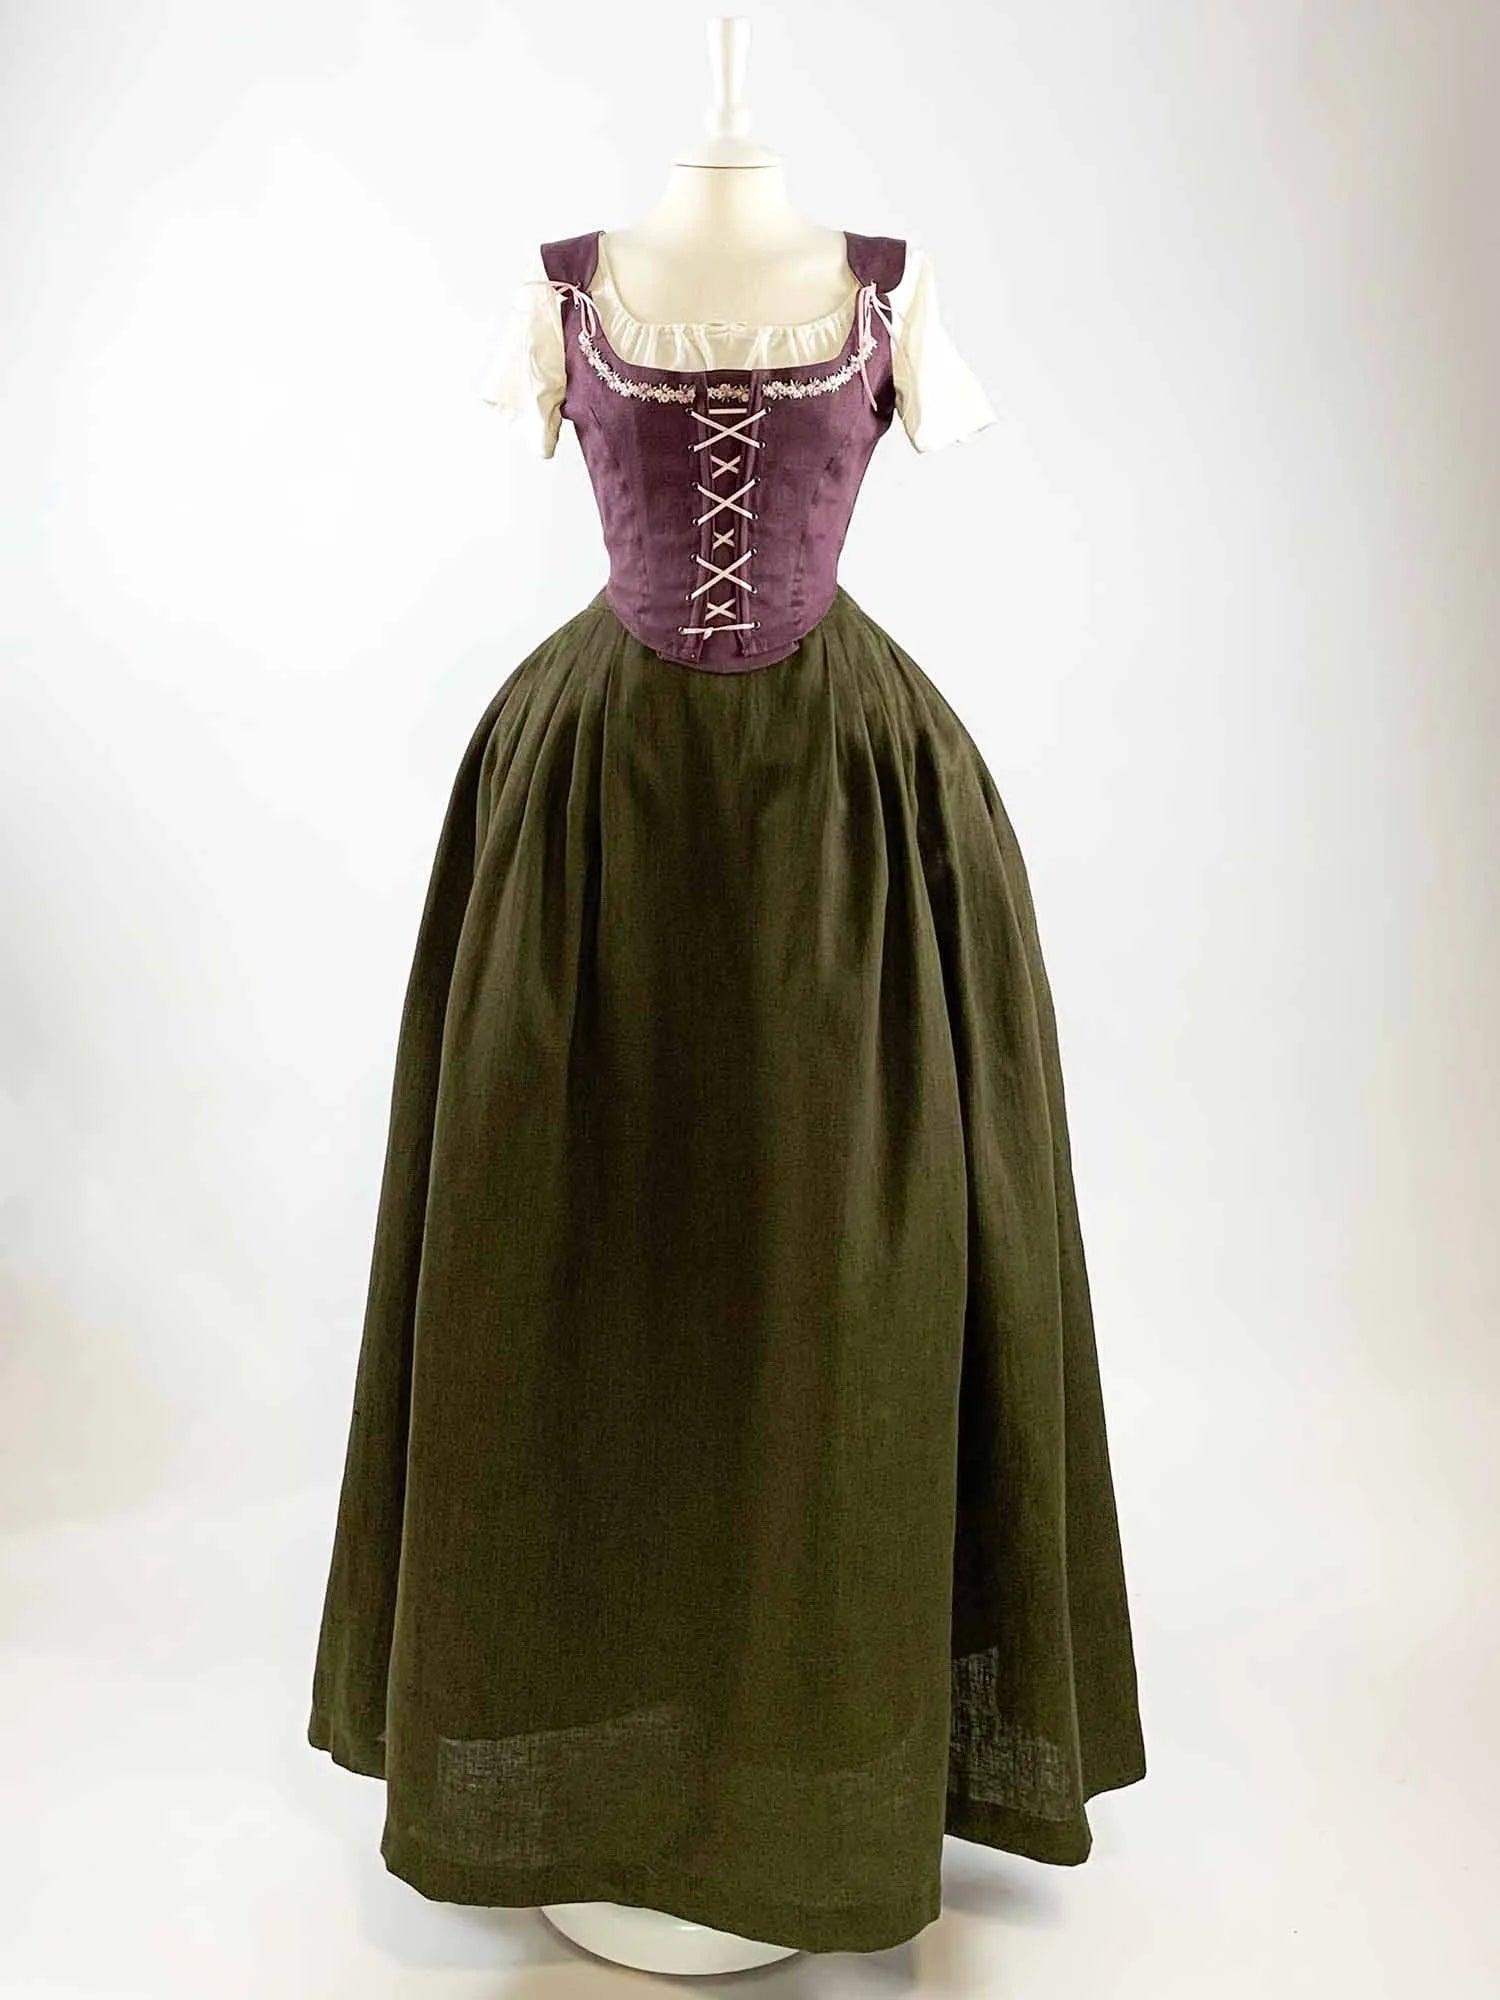 ISOLDE, Renaissance Costume in Purple & Moss Green Linen - Atelier Serraspina - Costume Renaissance en Lin violet et vert mousse